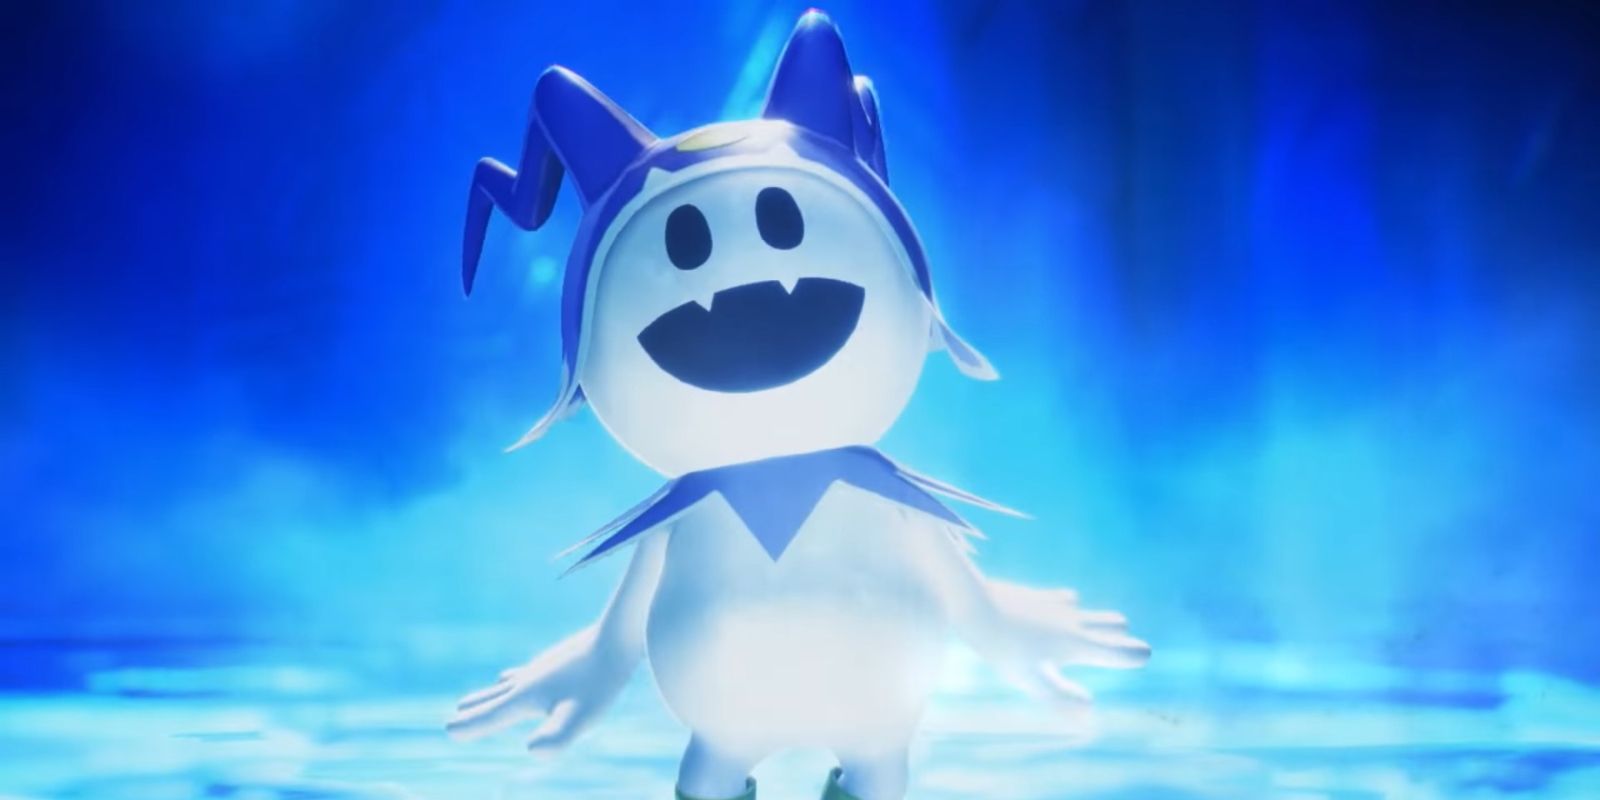 Jack Frost as seen in Shin Megami Tensei V